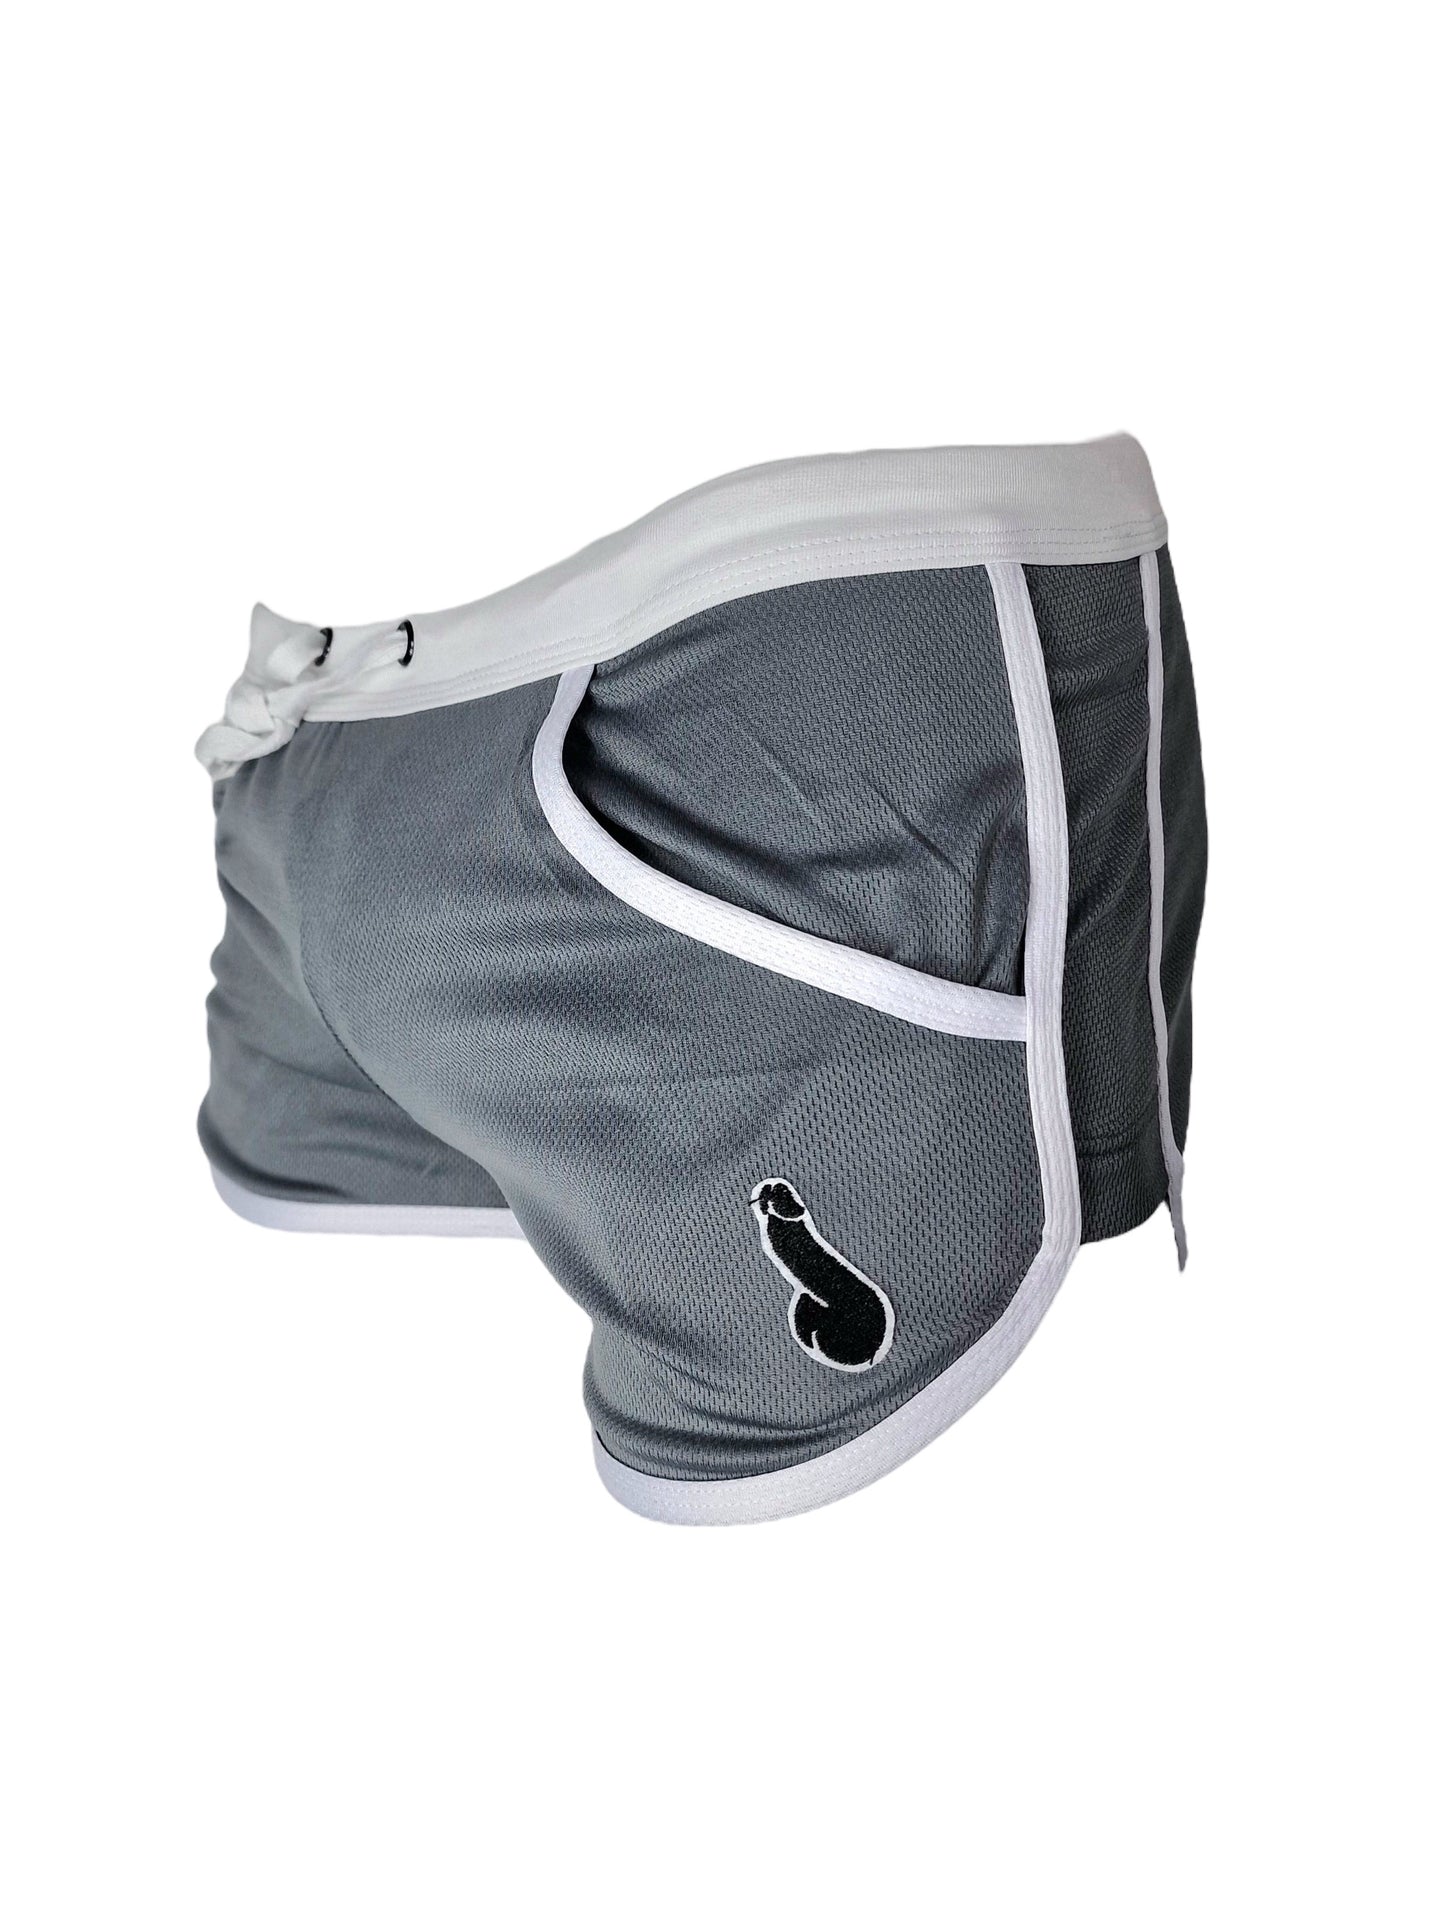 Shorts with sewn-in jockstrap - Silver grey